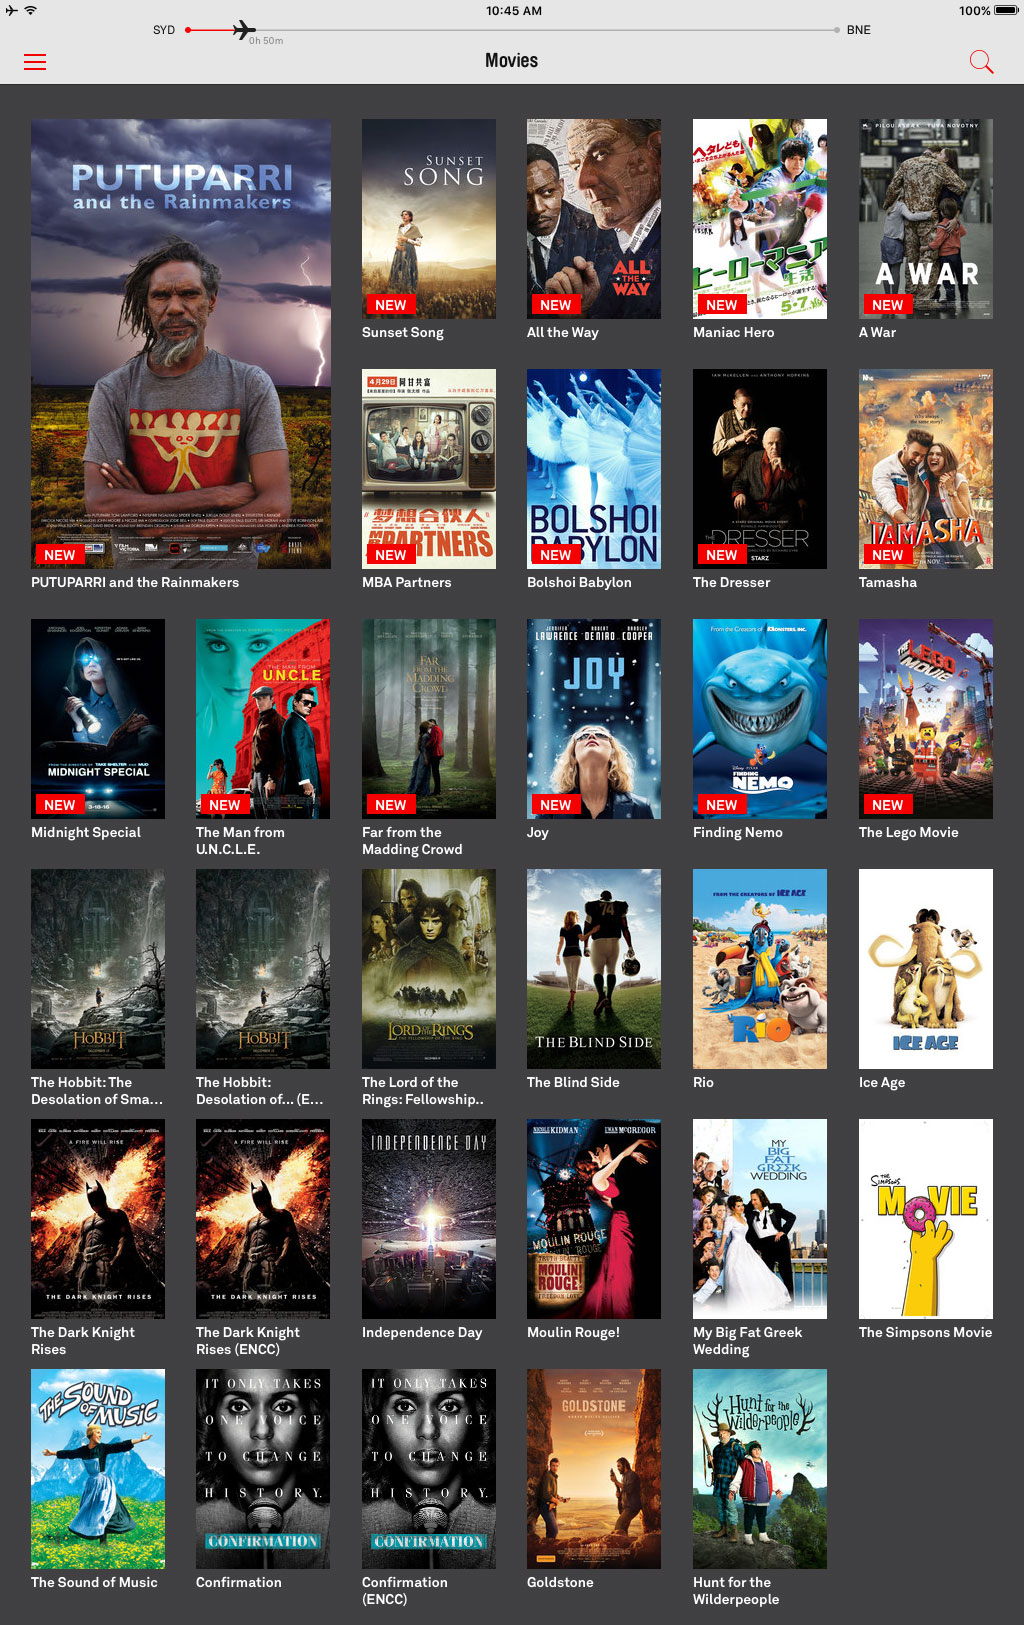 Qantas Q Streaming movie selection